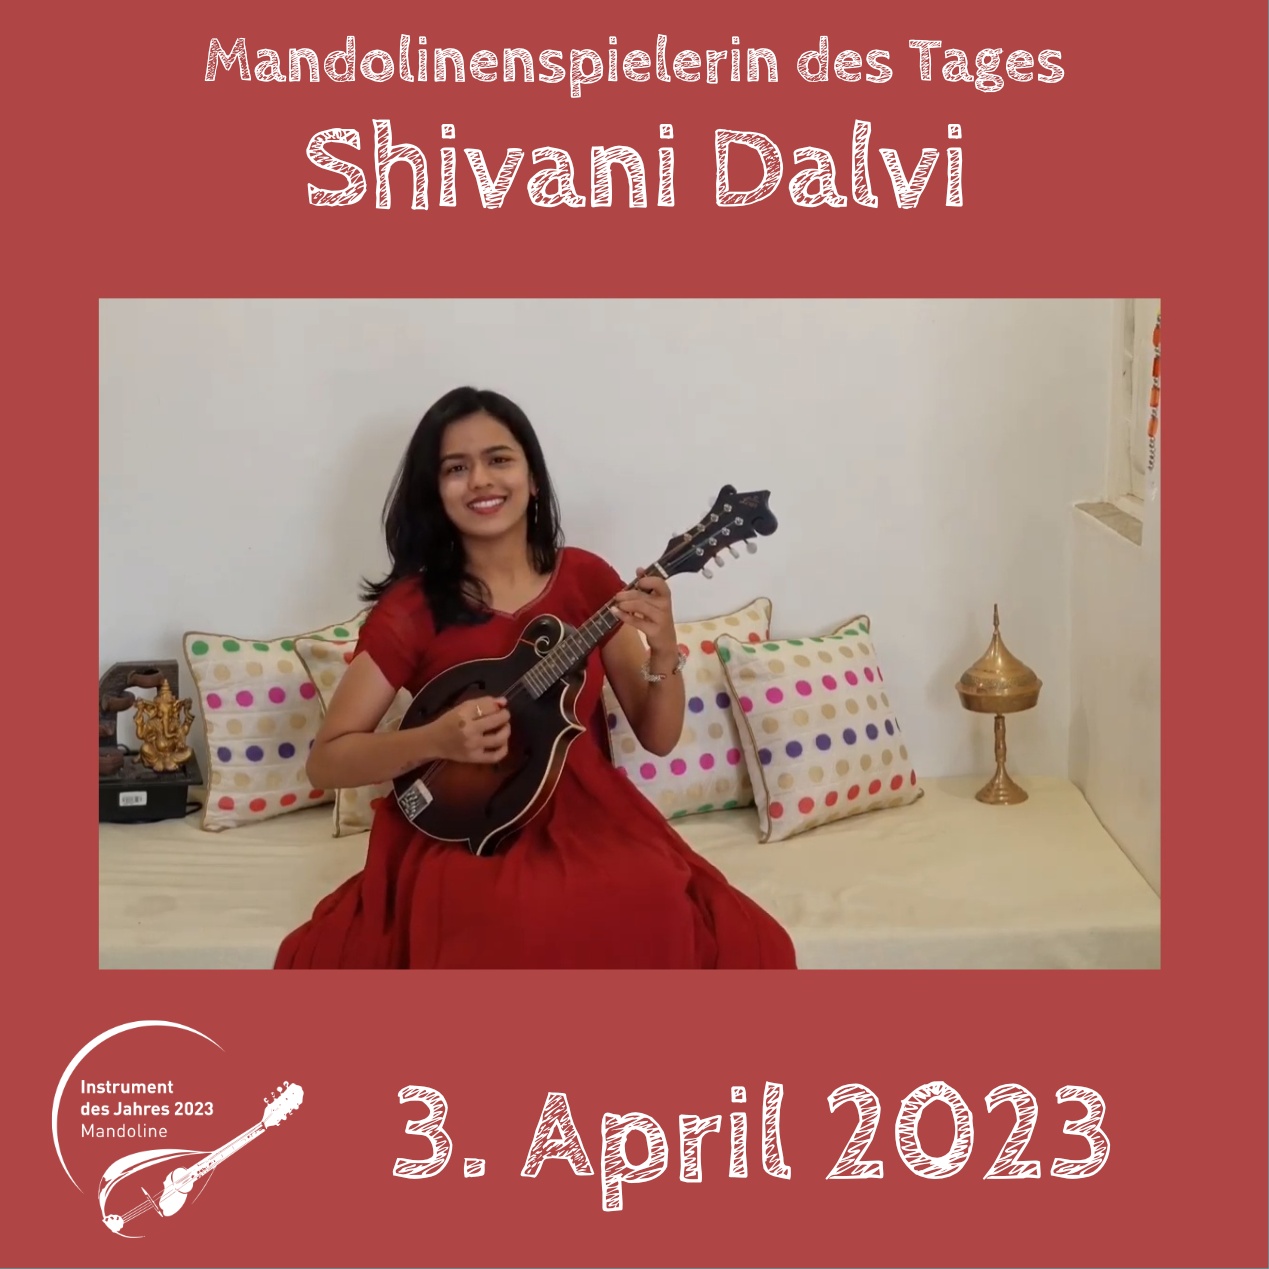 Shivani Dalvi Instrument des Jahres 2023 Mandolinenspieler des Tages